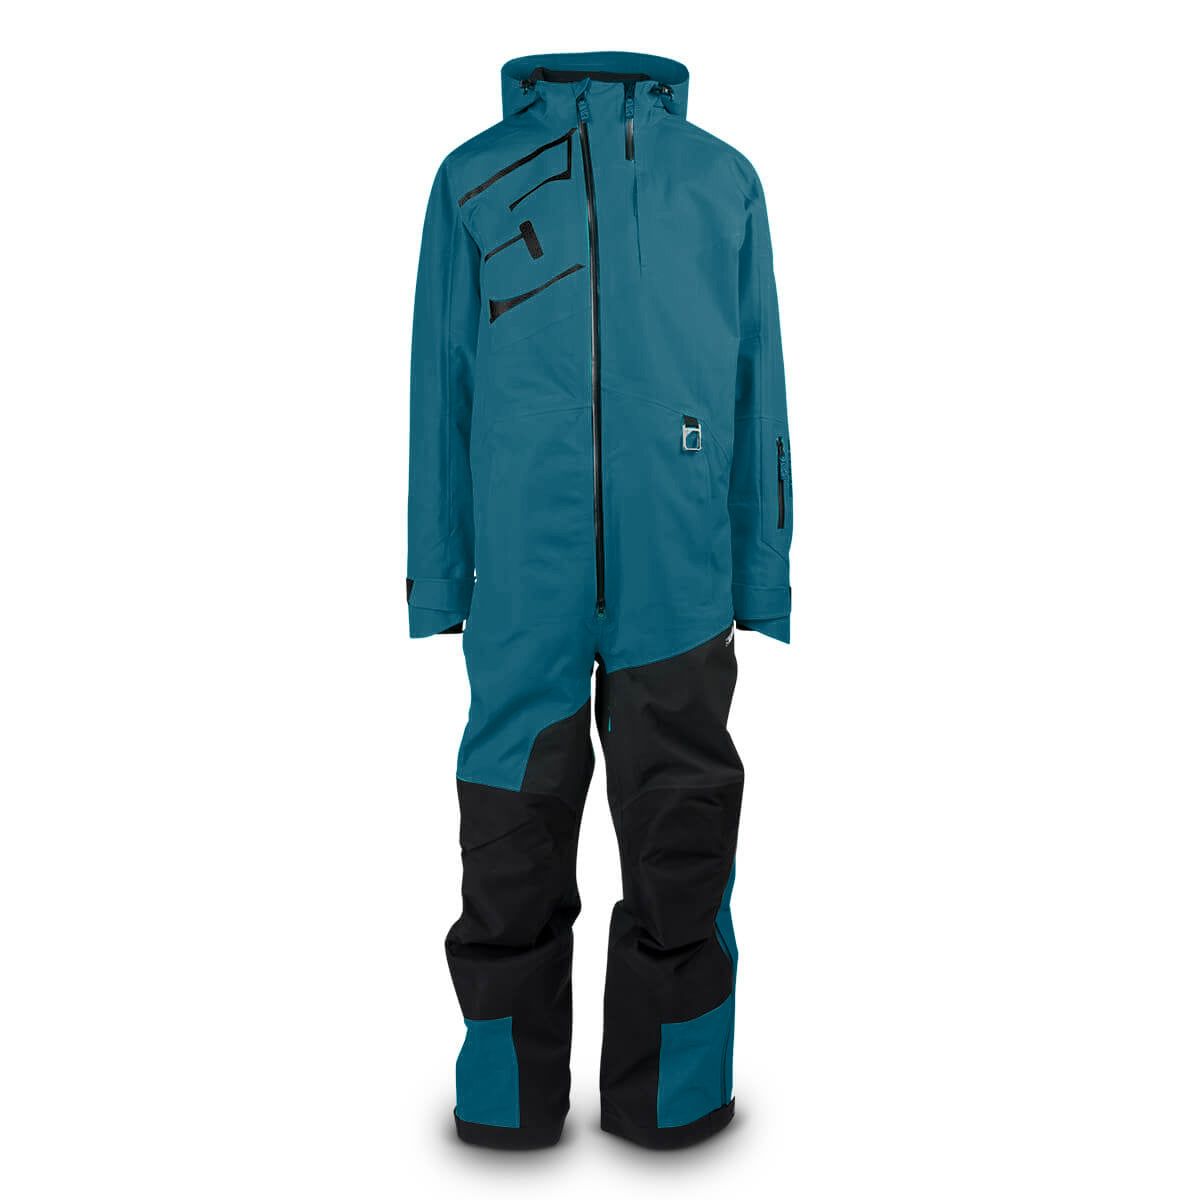 509, 509 Stoke Mono Suit Shell, Snow Monosuit, Monosuit Shell, Non-Insulated Monosuit, Men's Snow Suit, Men's Monosuit, Snow Gear, Ride 509, F03001601